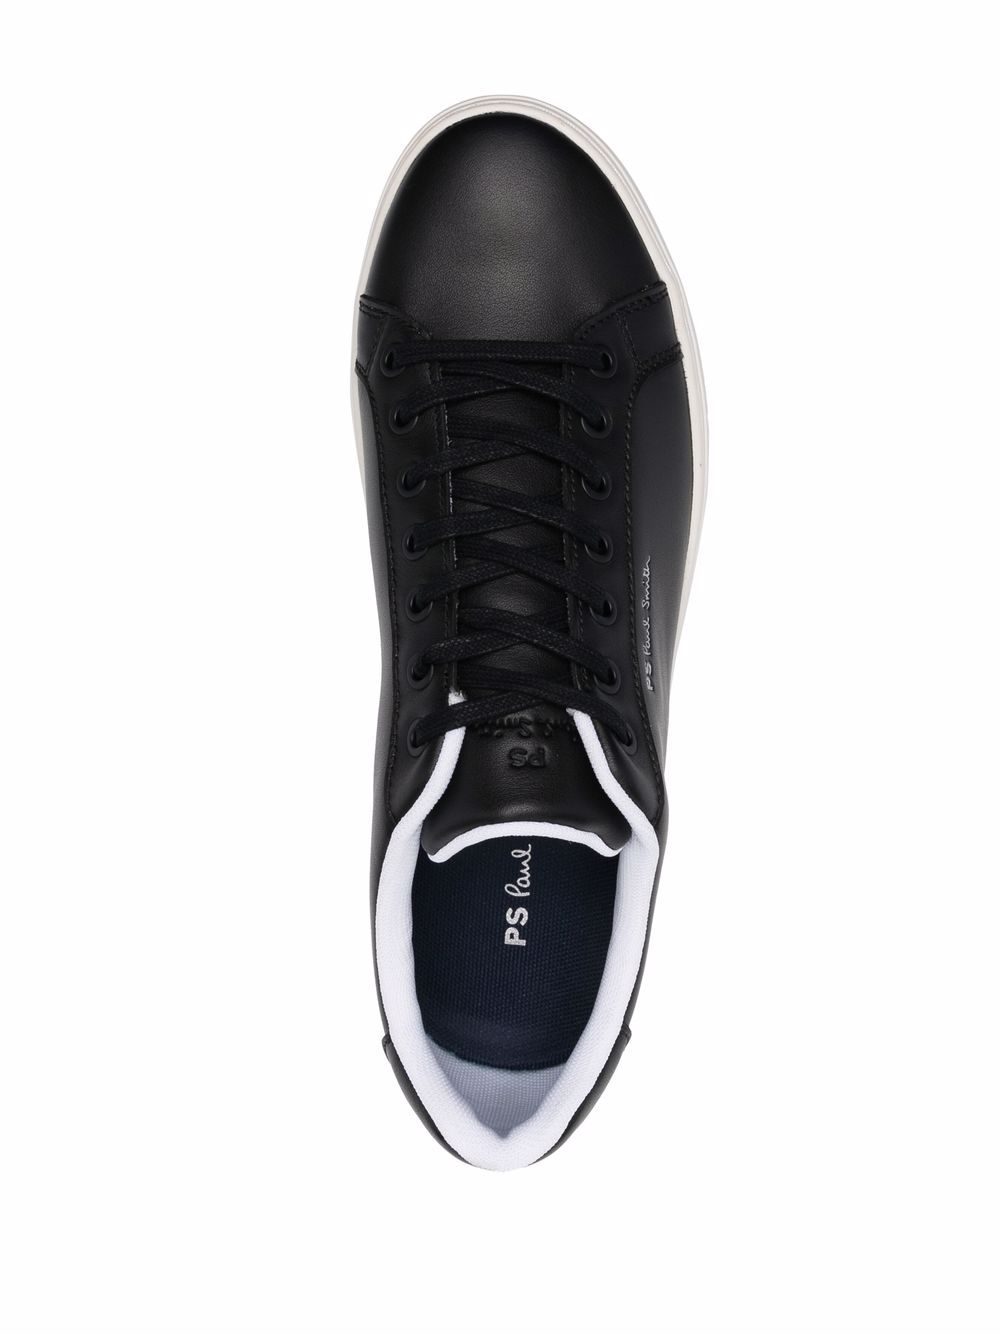 Paul Smith Sneakers Black